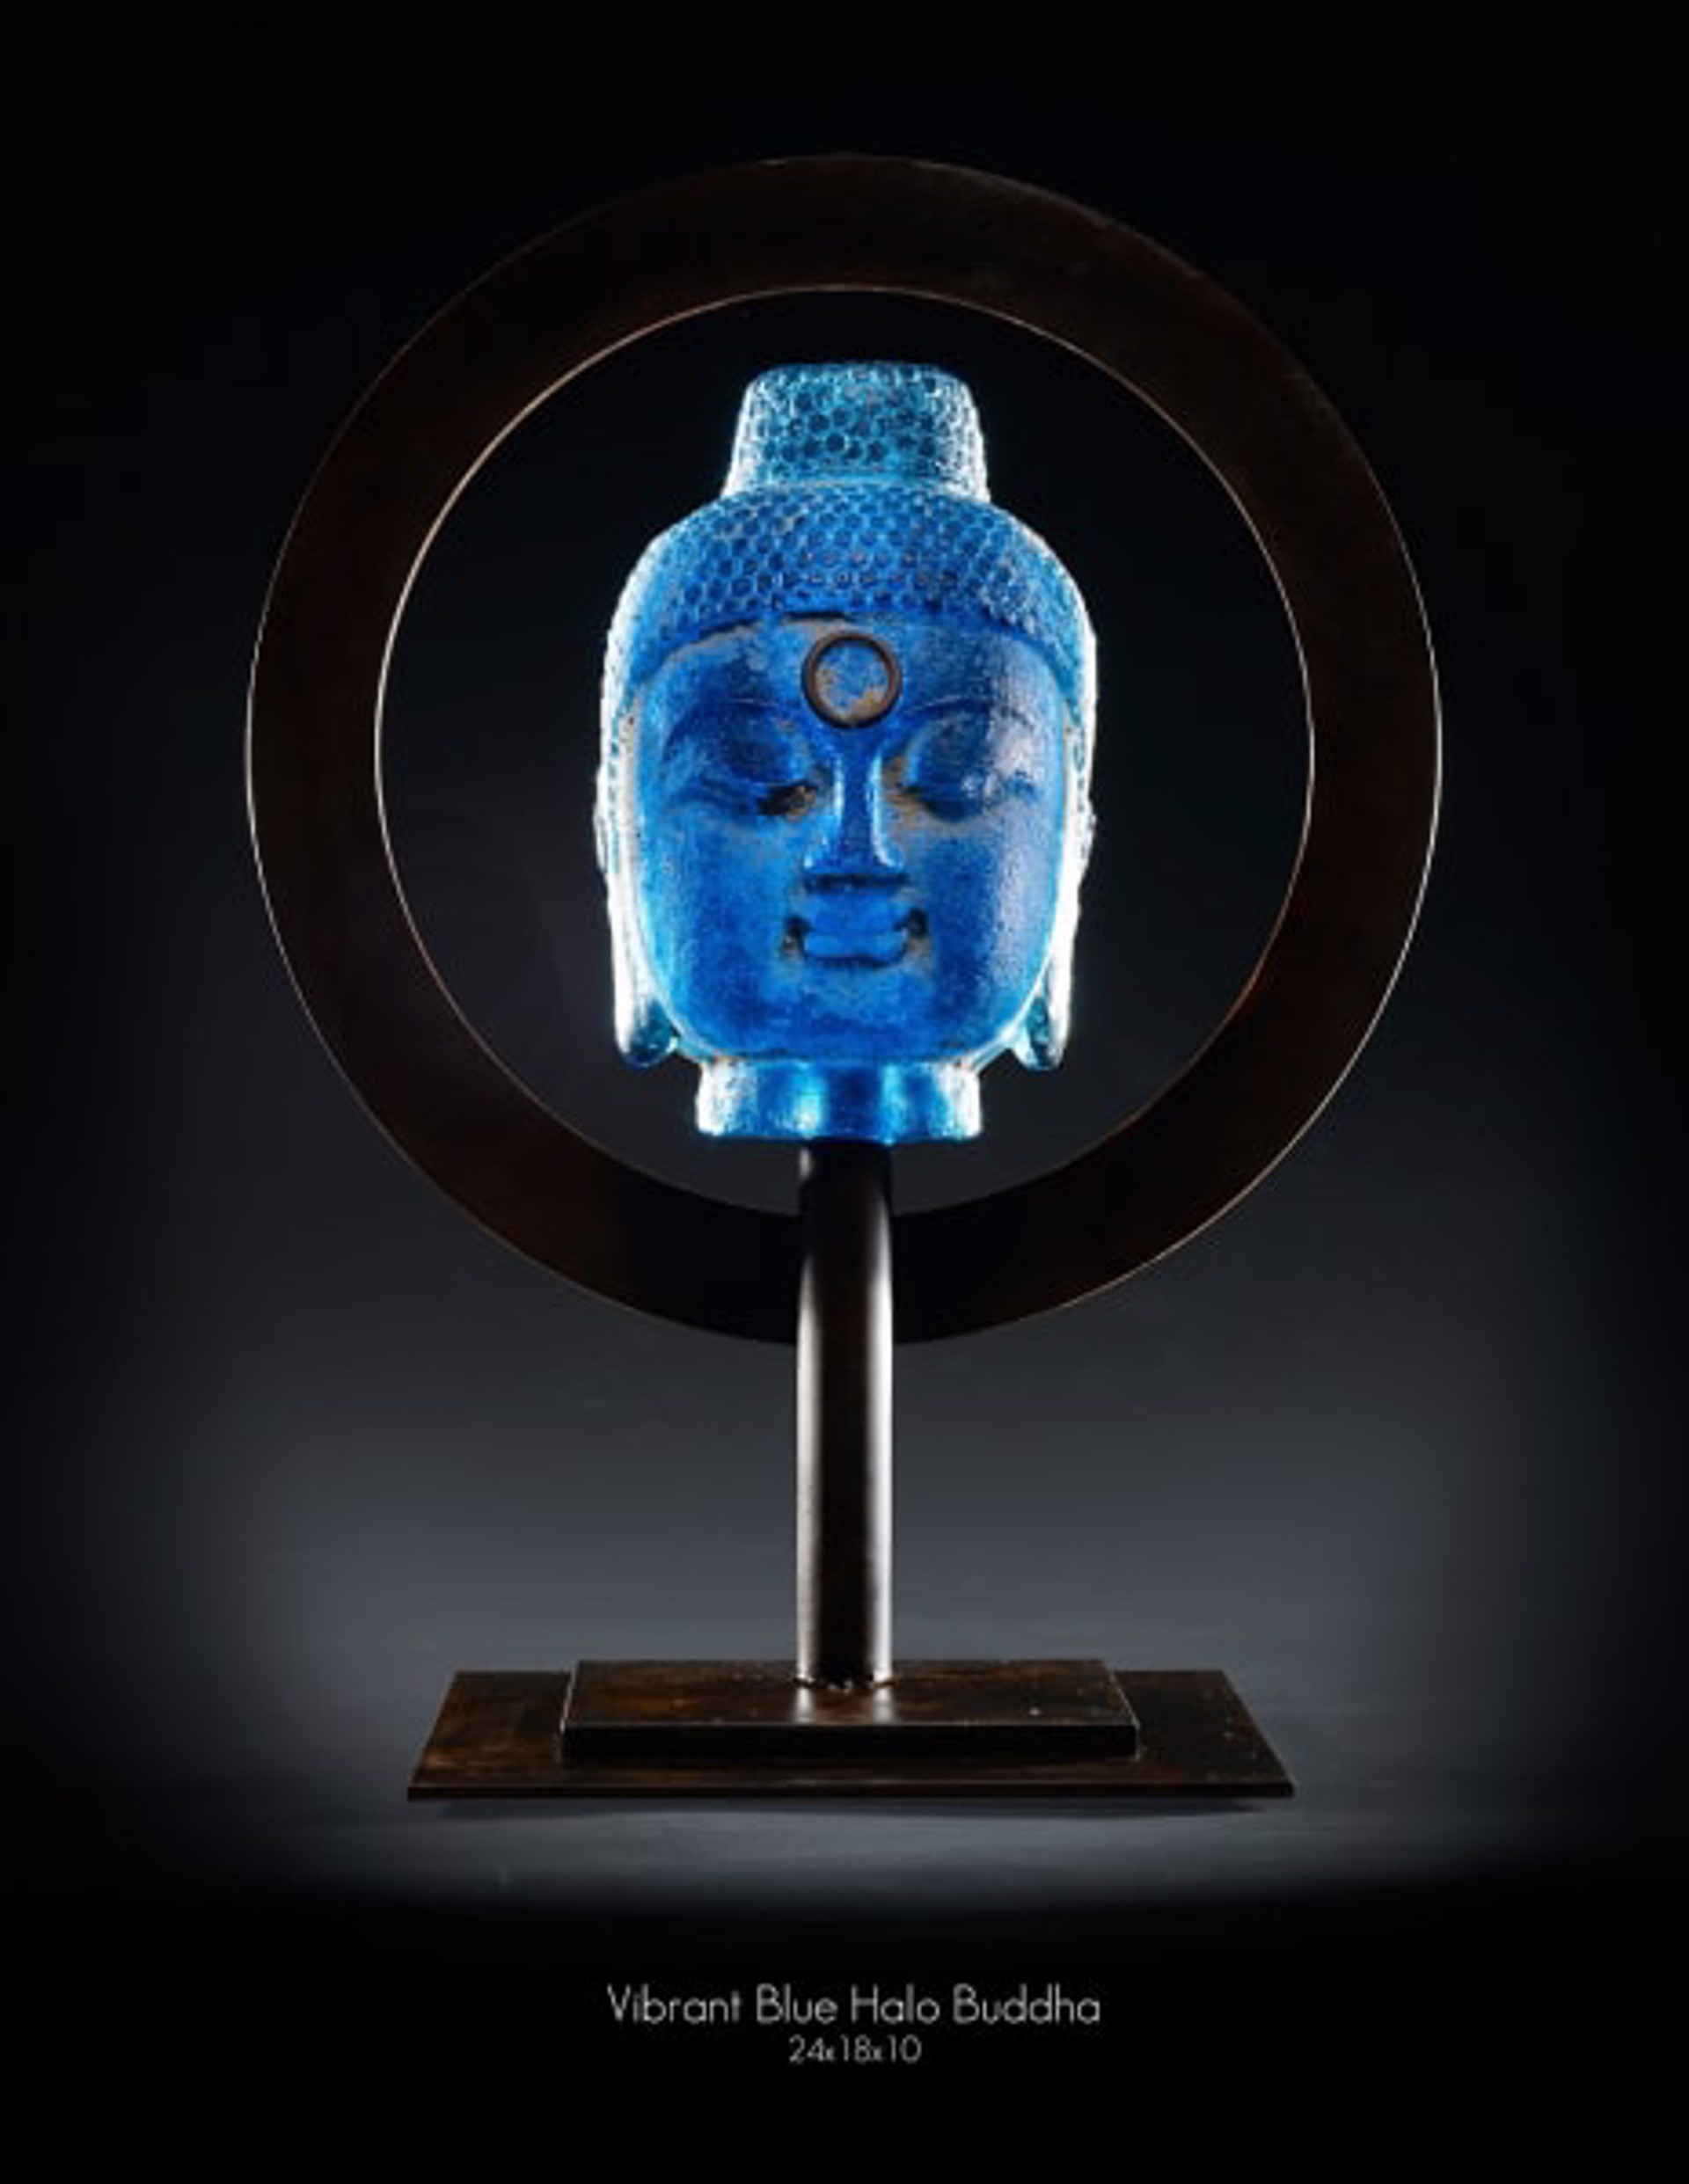 Halo Buddha Vibrant Blue by Marlene Rose (b. 1967)